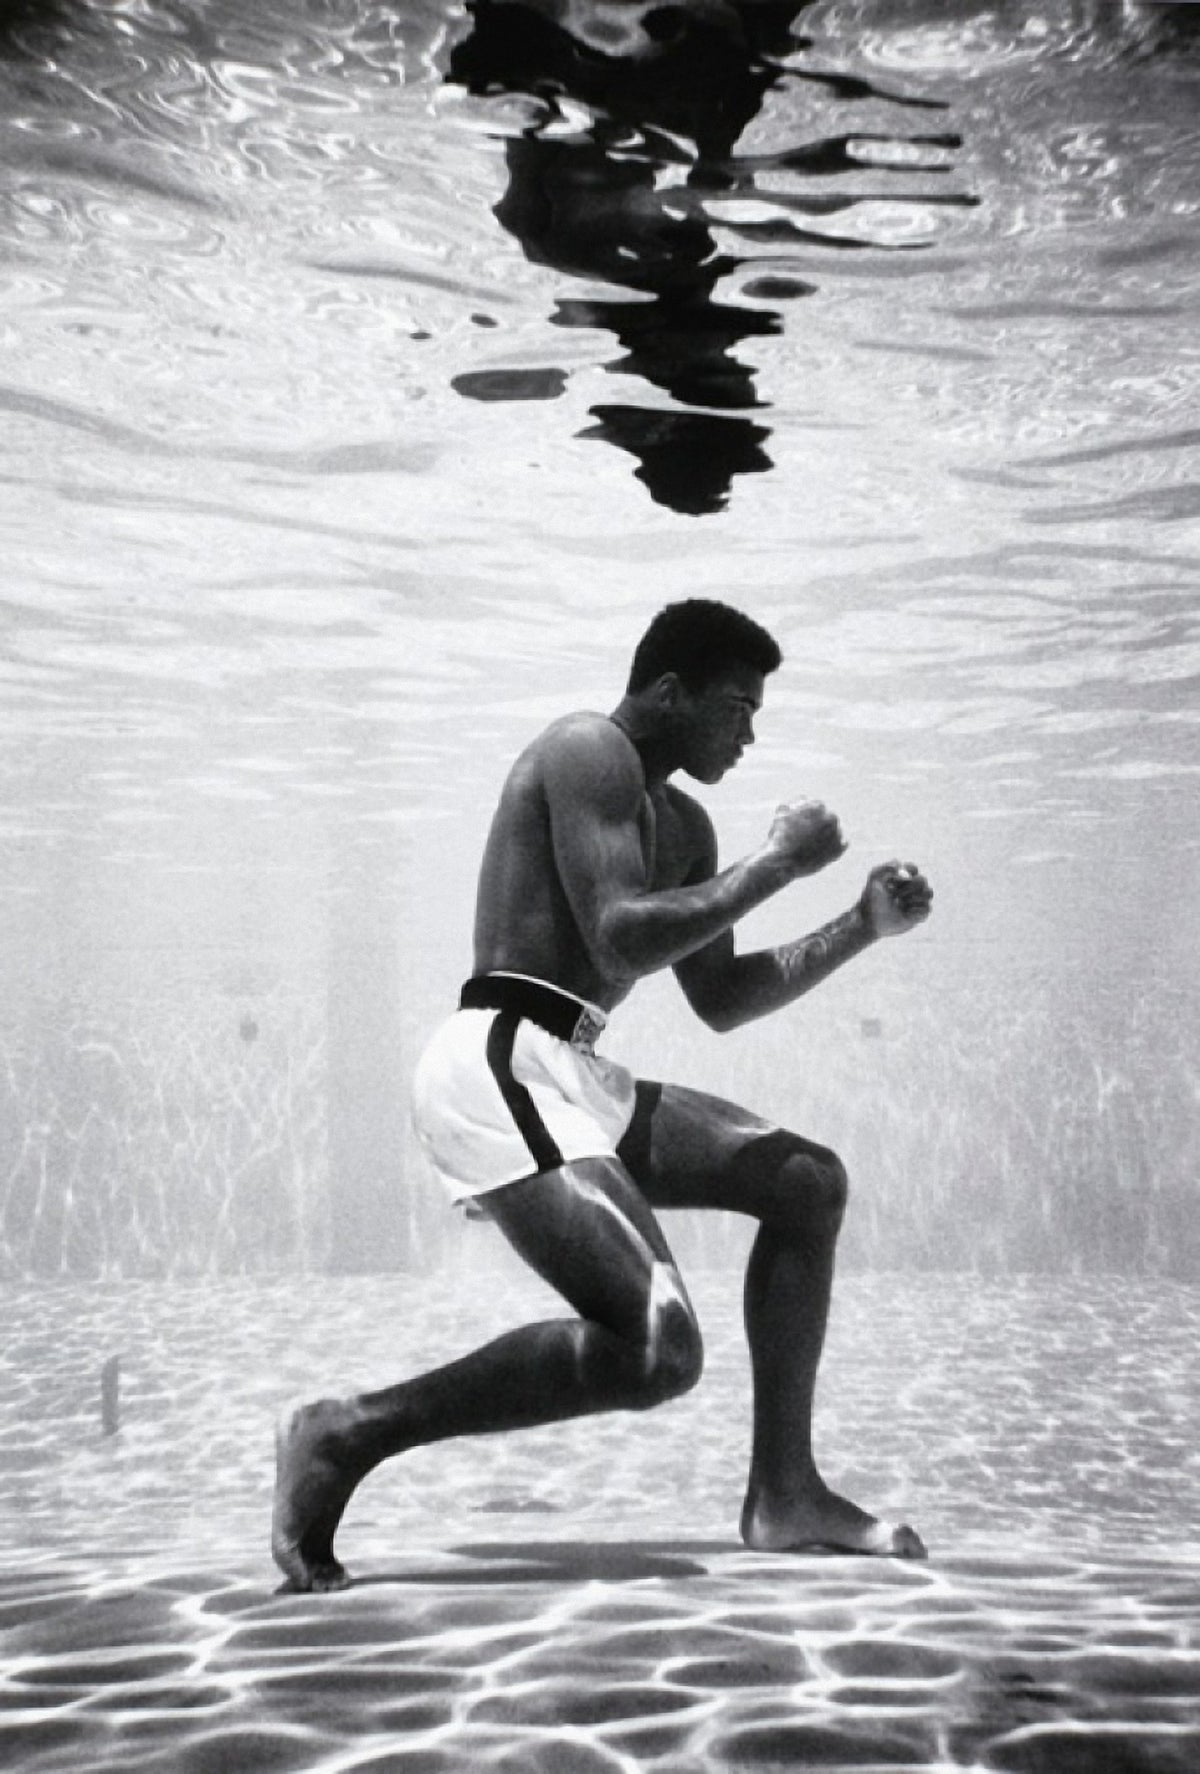 Underwater, Muhammad Ali